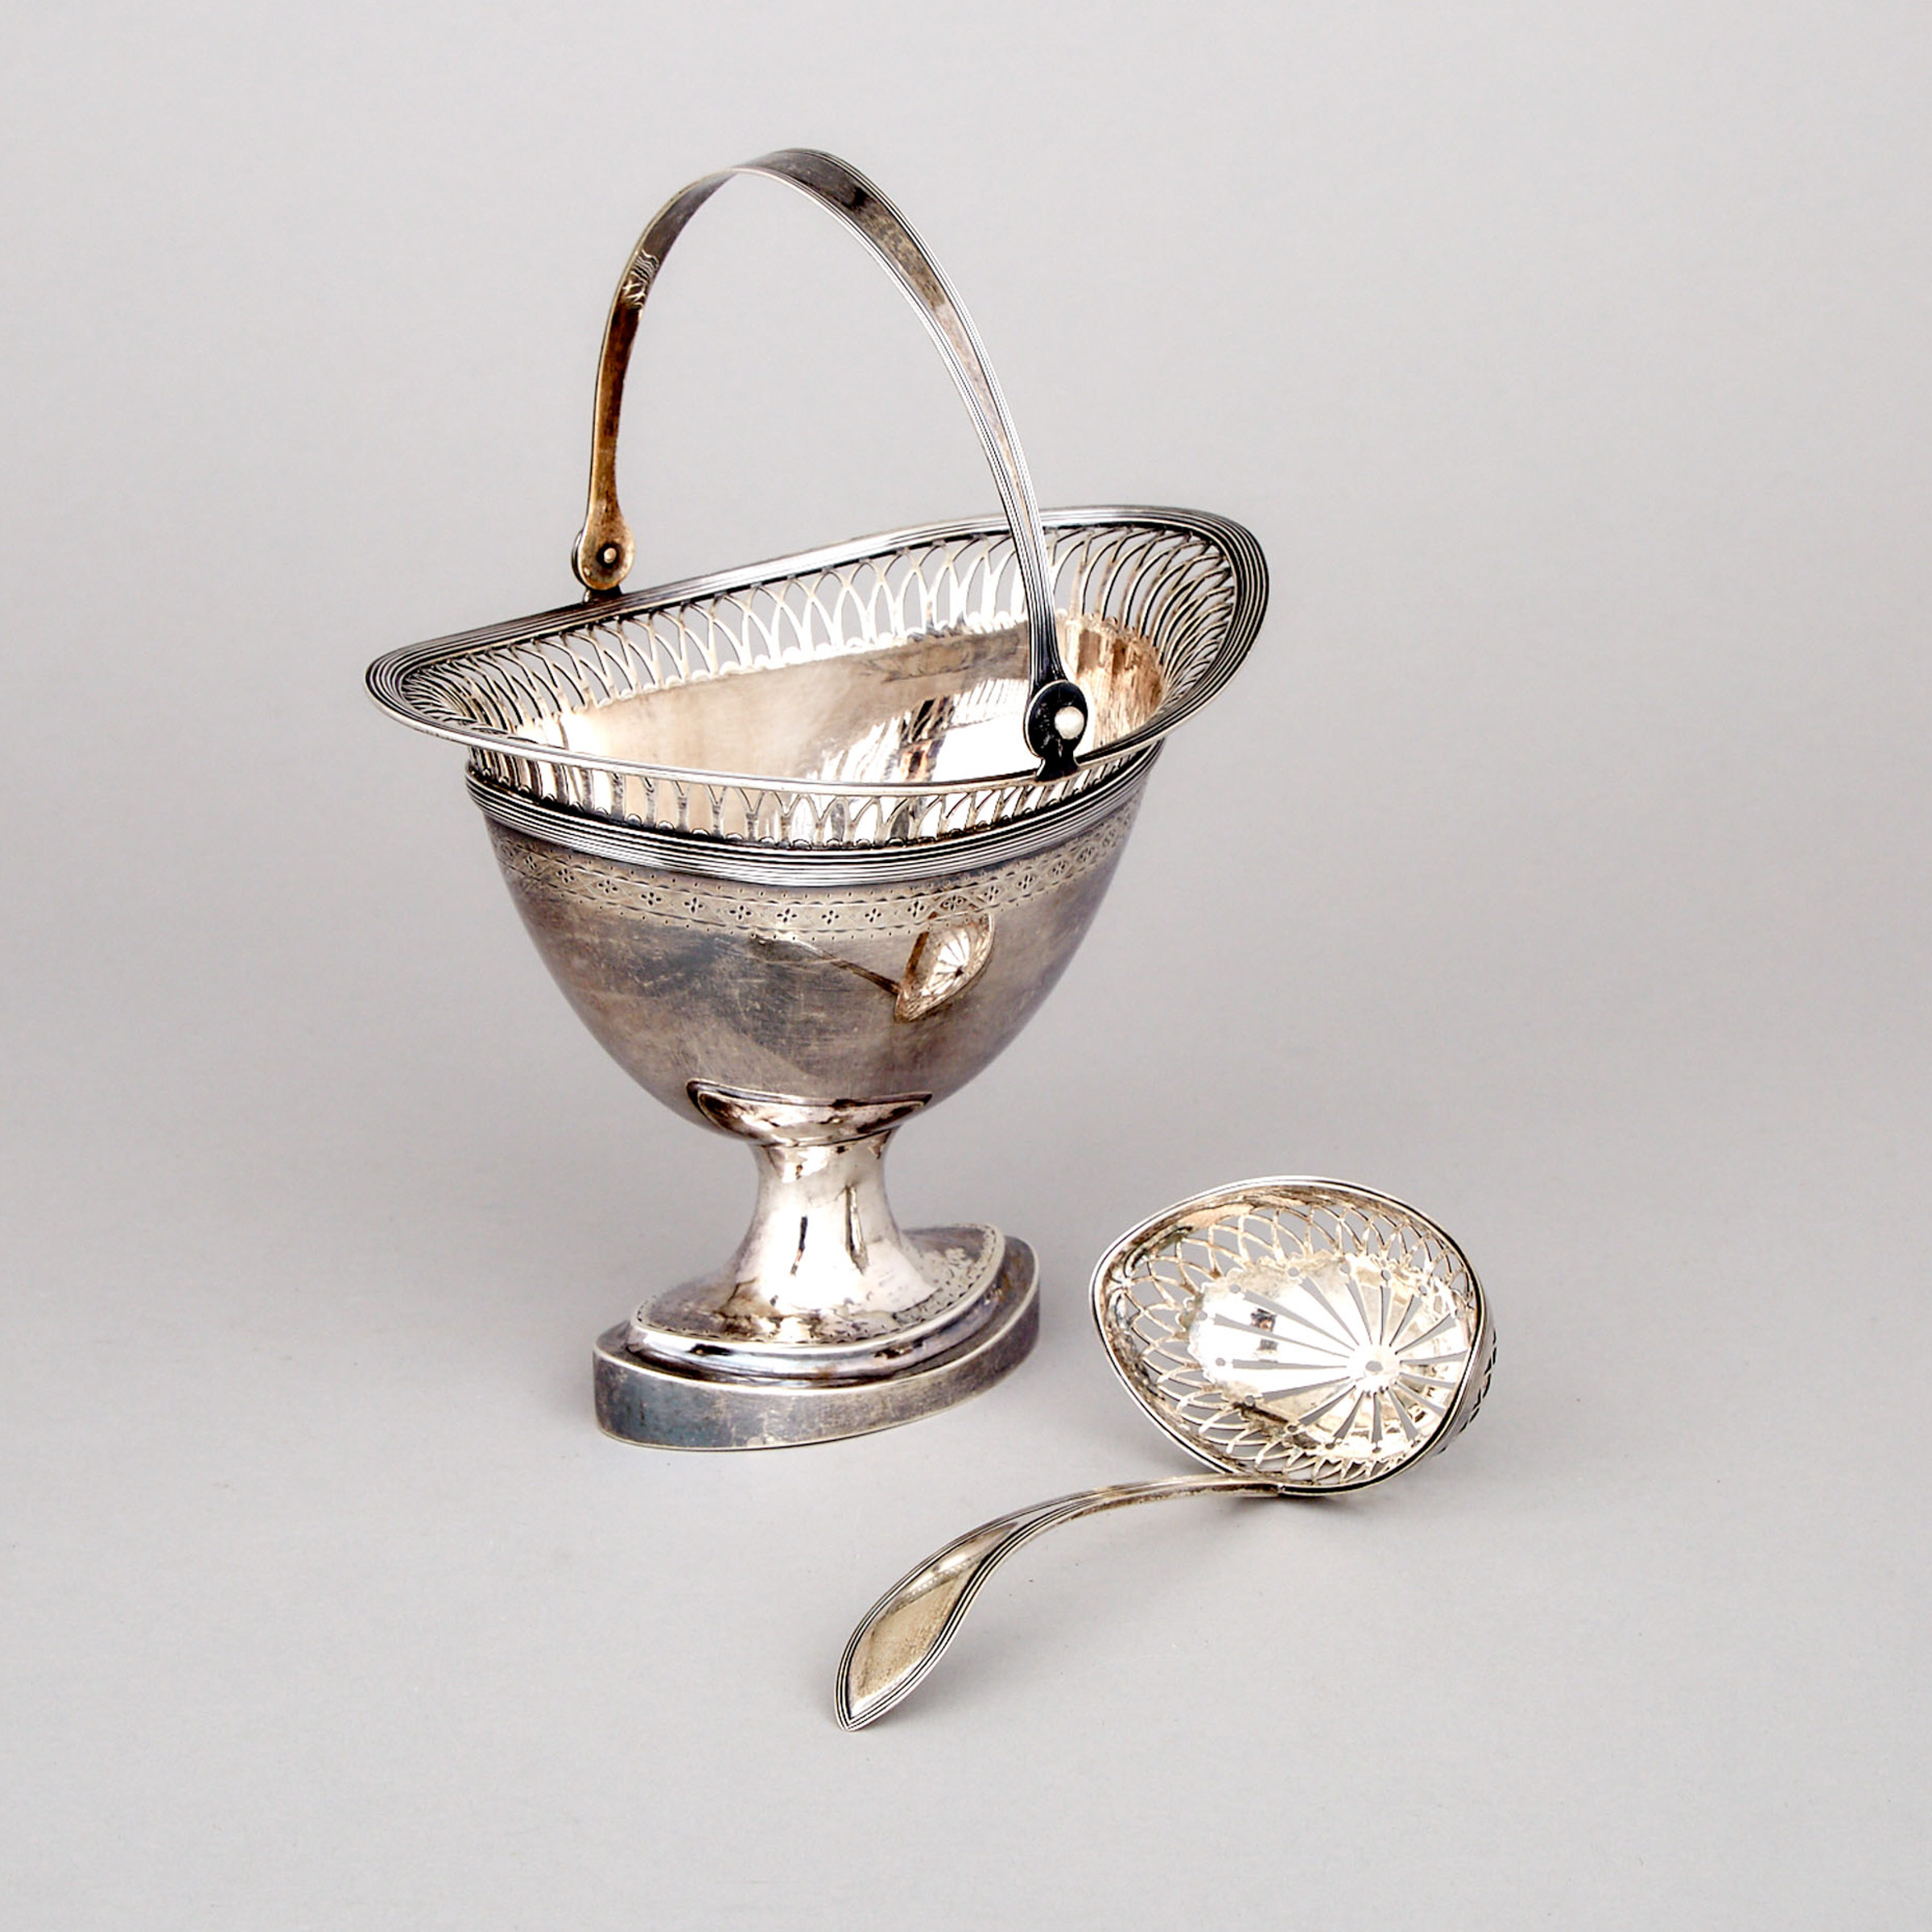 Dutch Silver Oval Sugar Basket with Sifting Ladle, Amsterdam, 1858